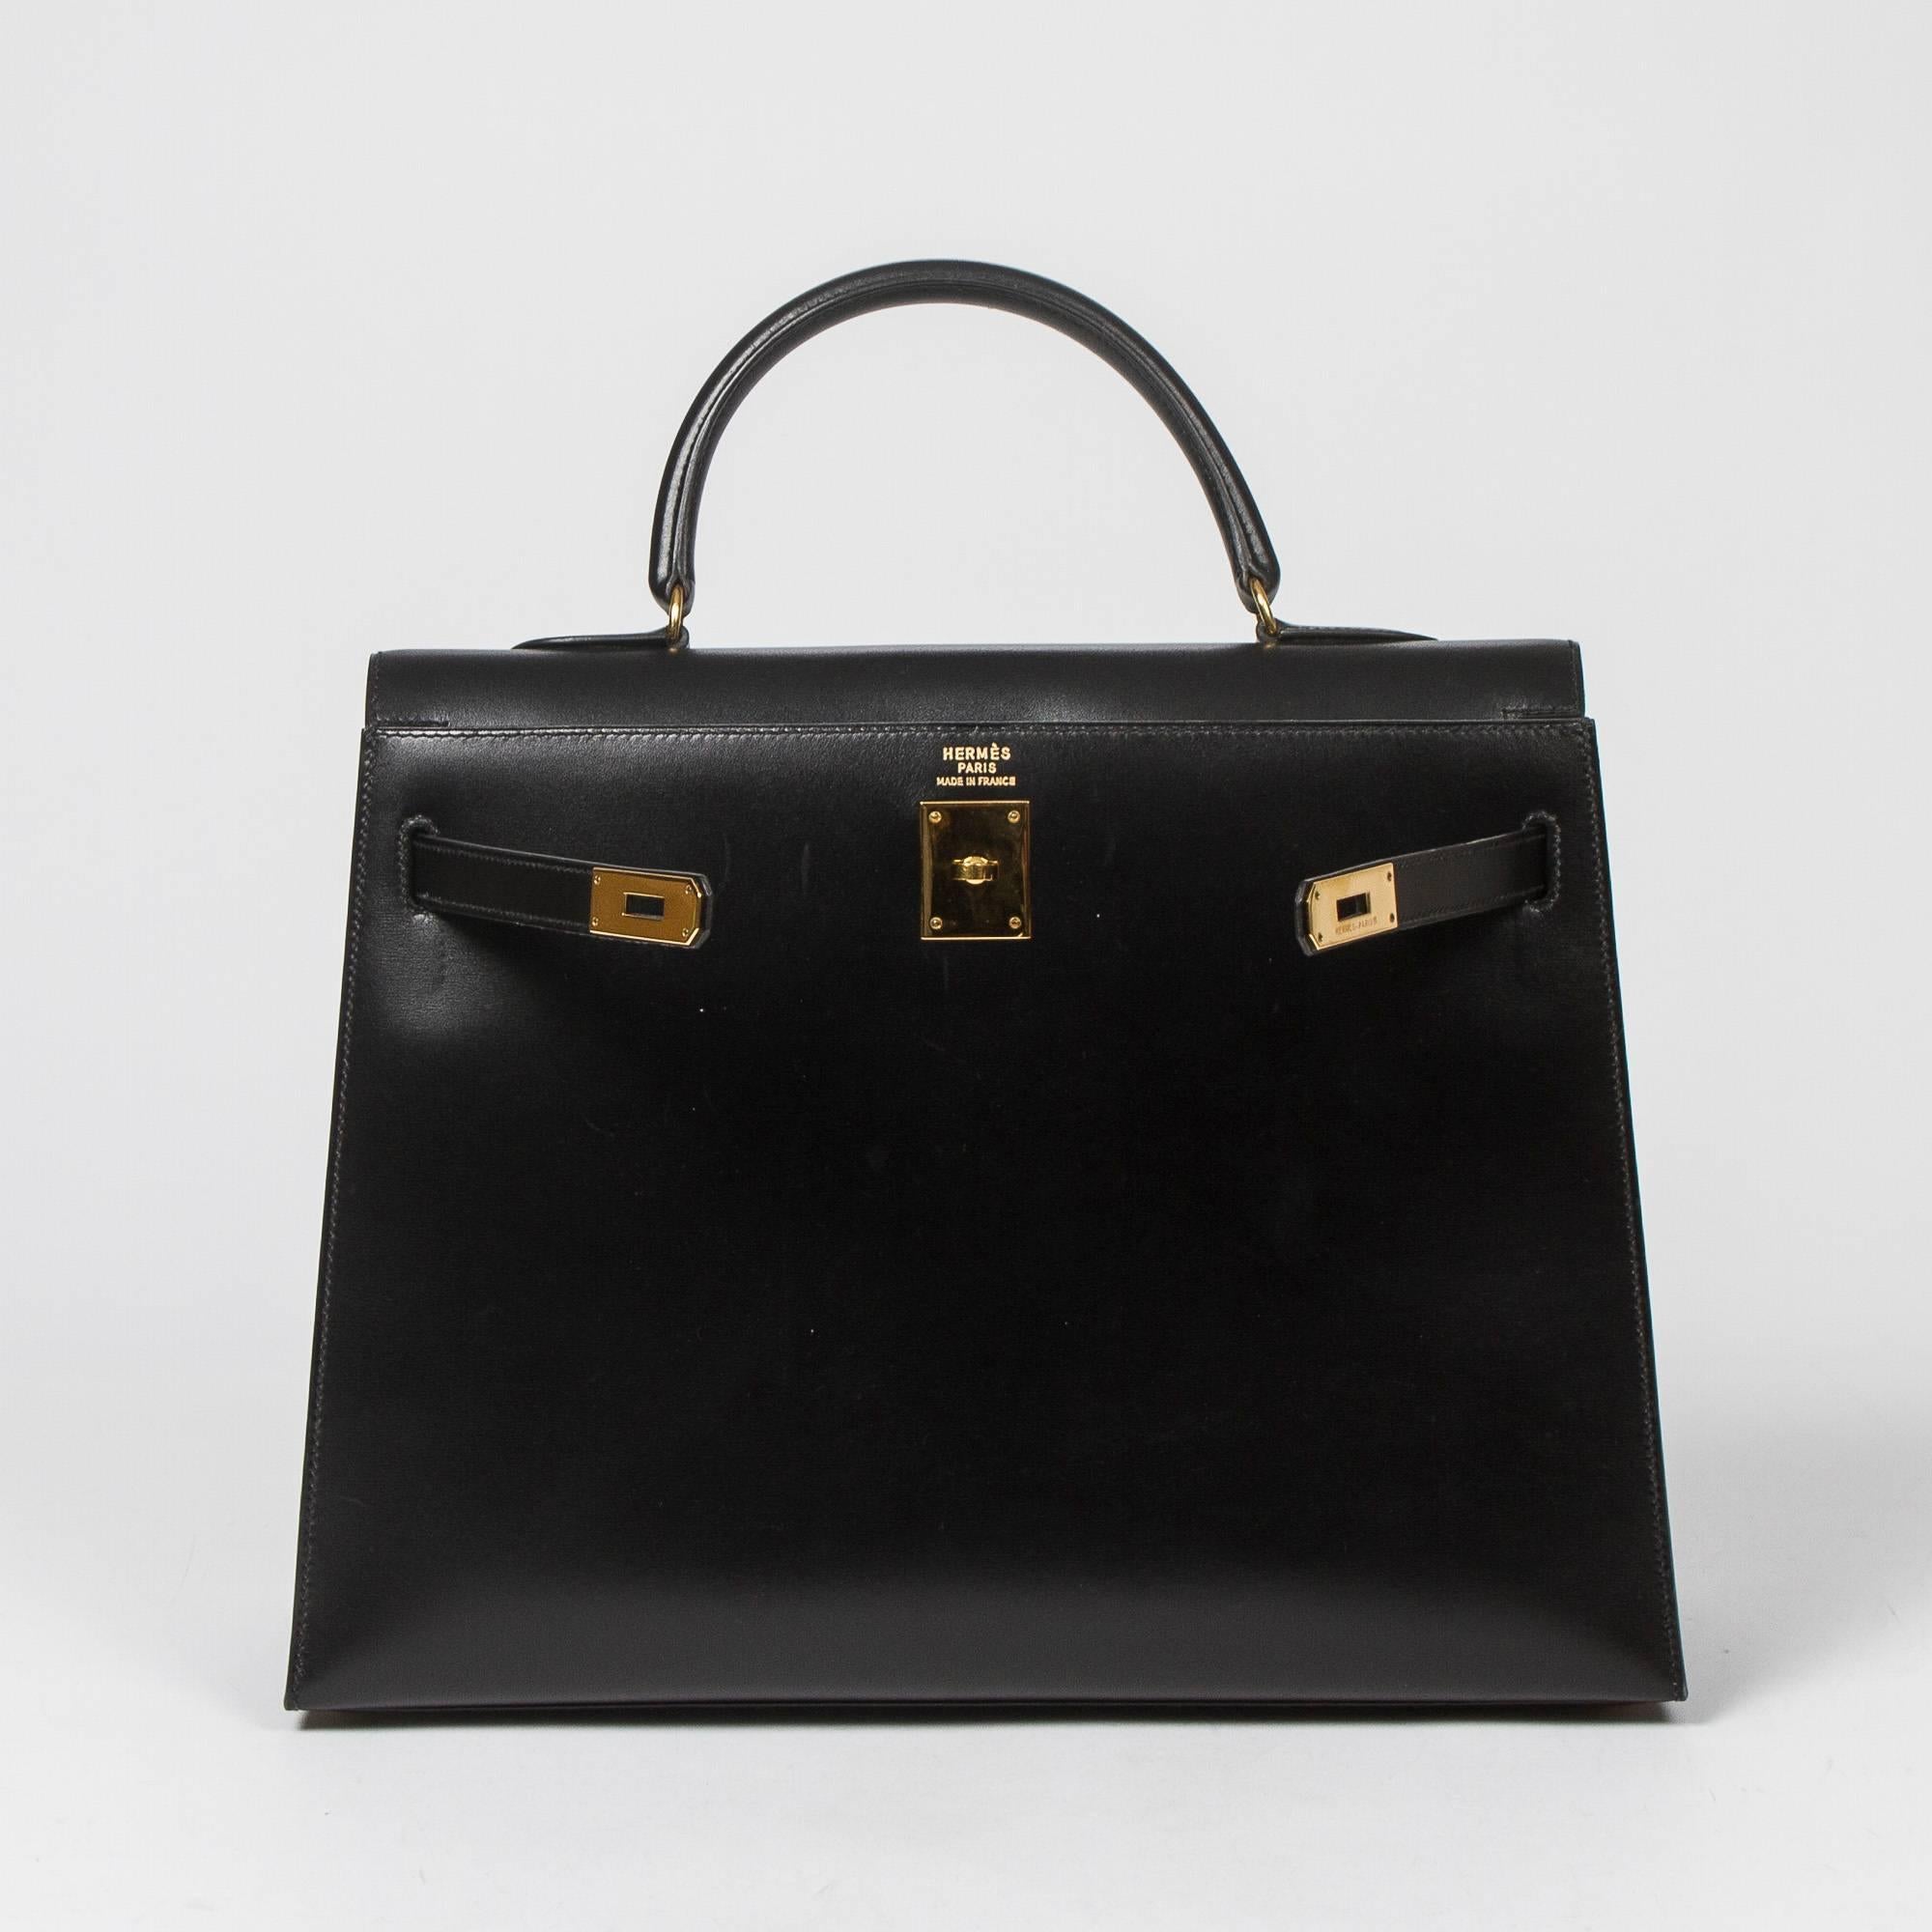 Hermes Kelly Sellier 35 in black box leather  2